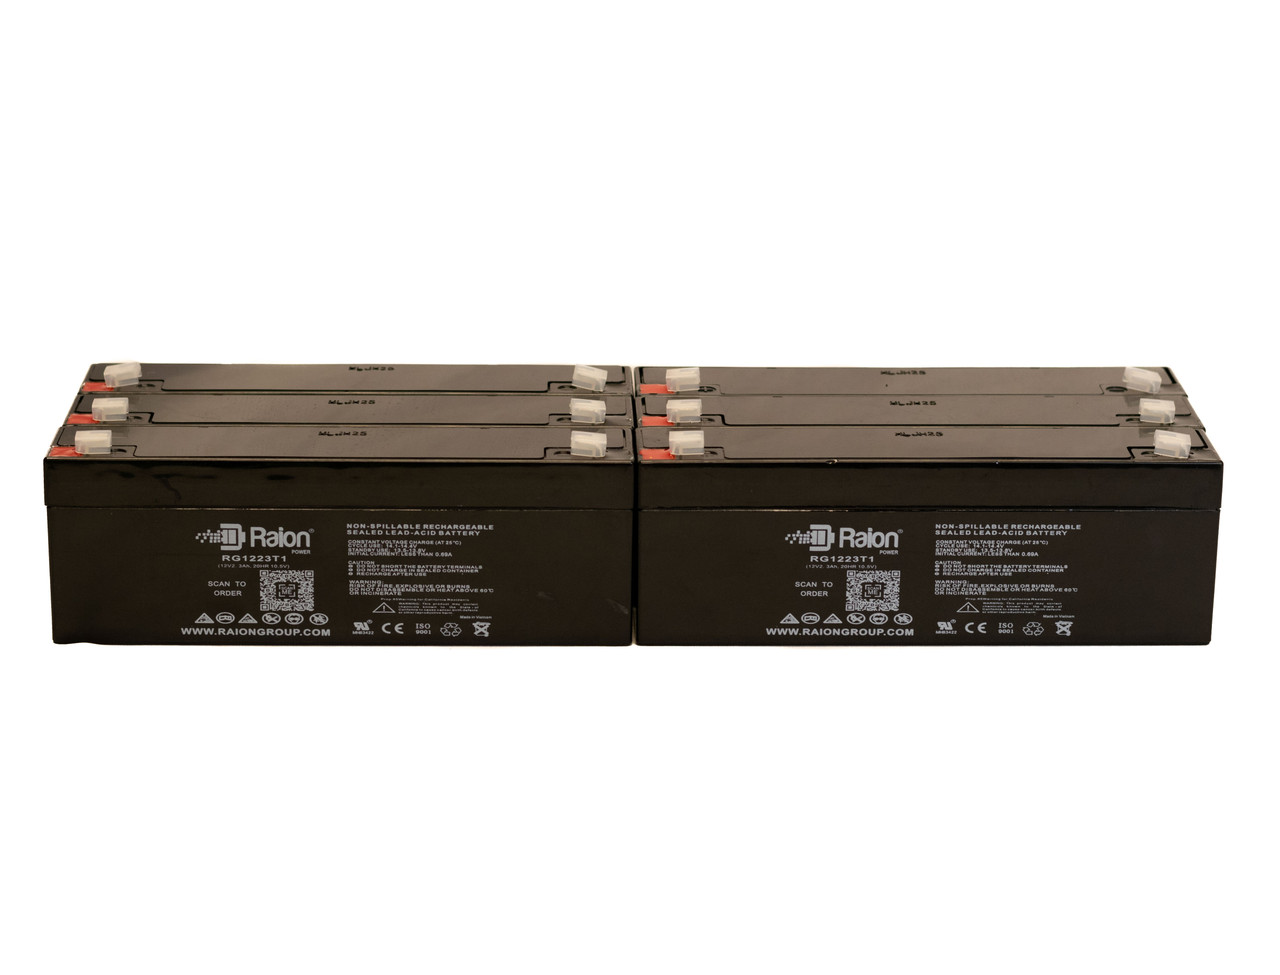 Raion Power 12V 2.3Ah RG1223T1 Replacement Medical Battery for Novametrix 840 Pulse Oximeter - 6 Pack